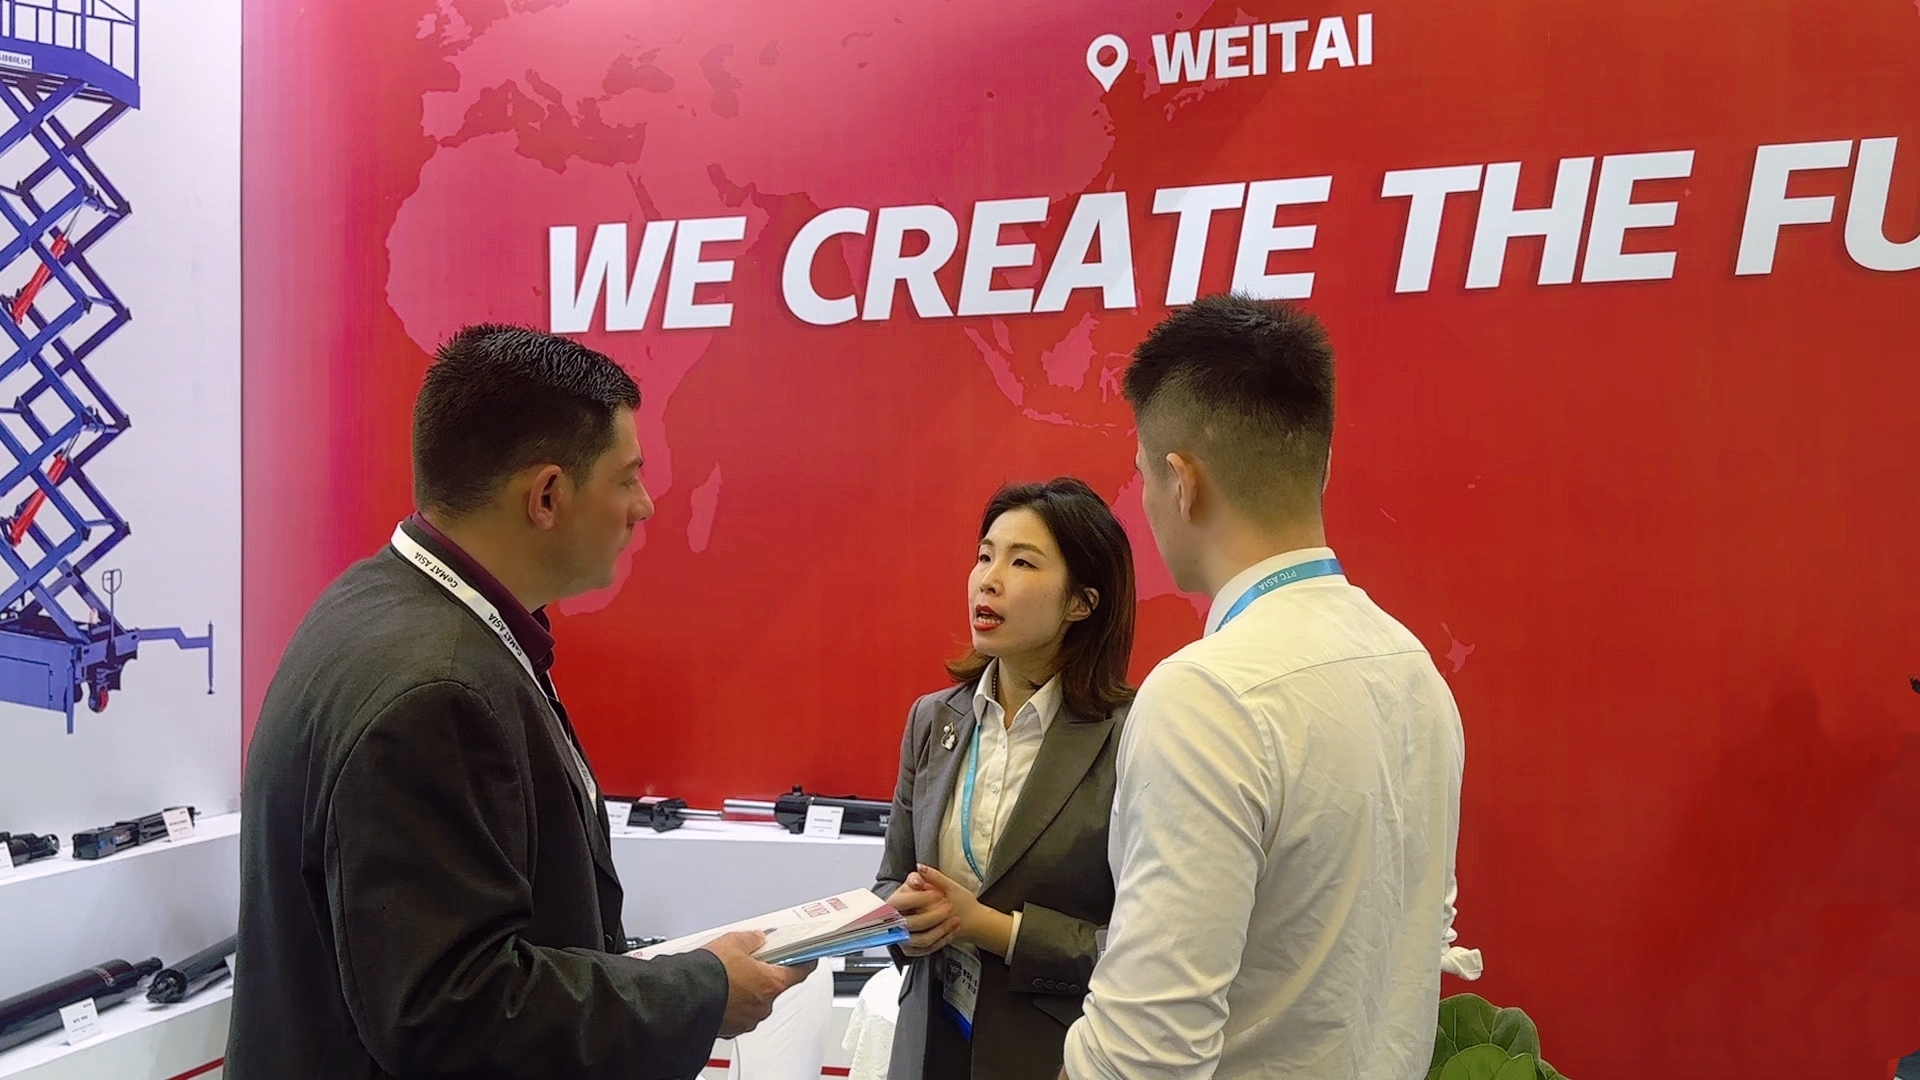 WEITAI Team with customer